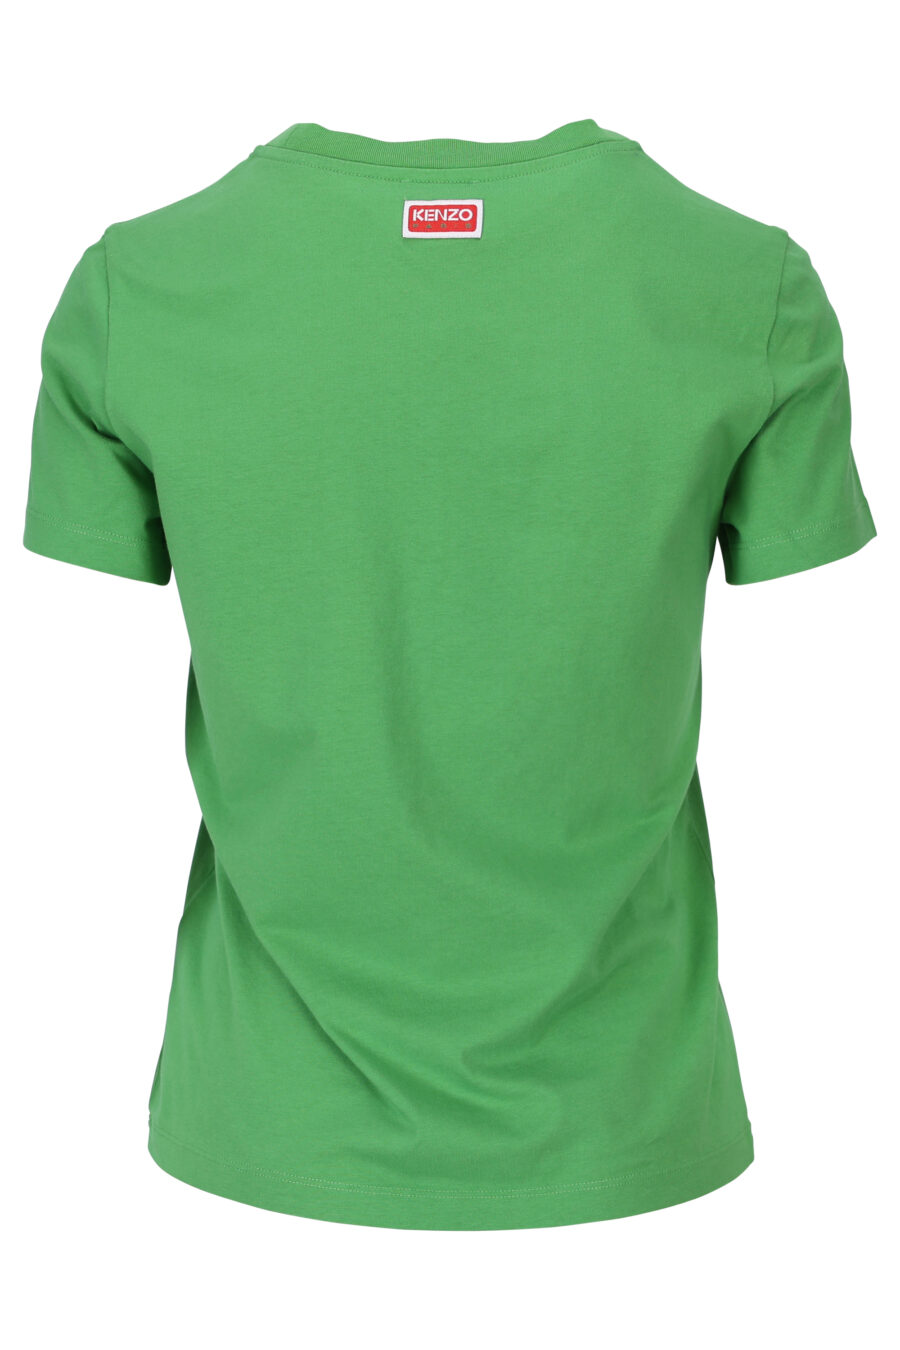 Camiseta verde con logo "tiger" bordado - 3612230552524 1